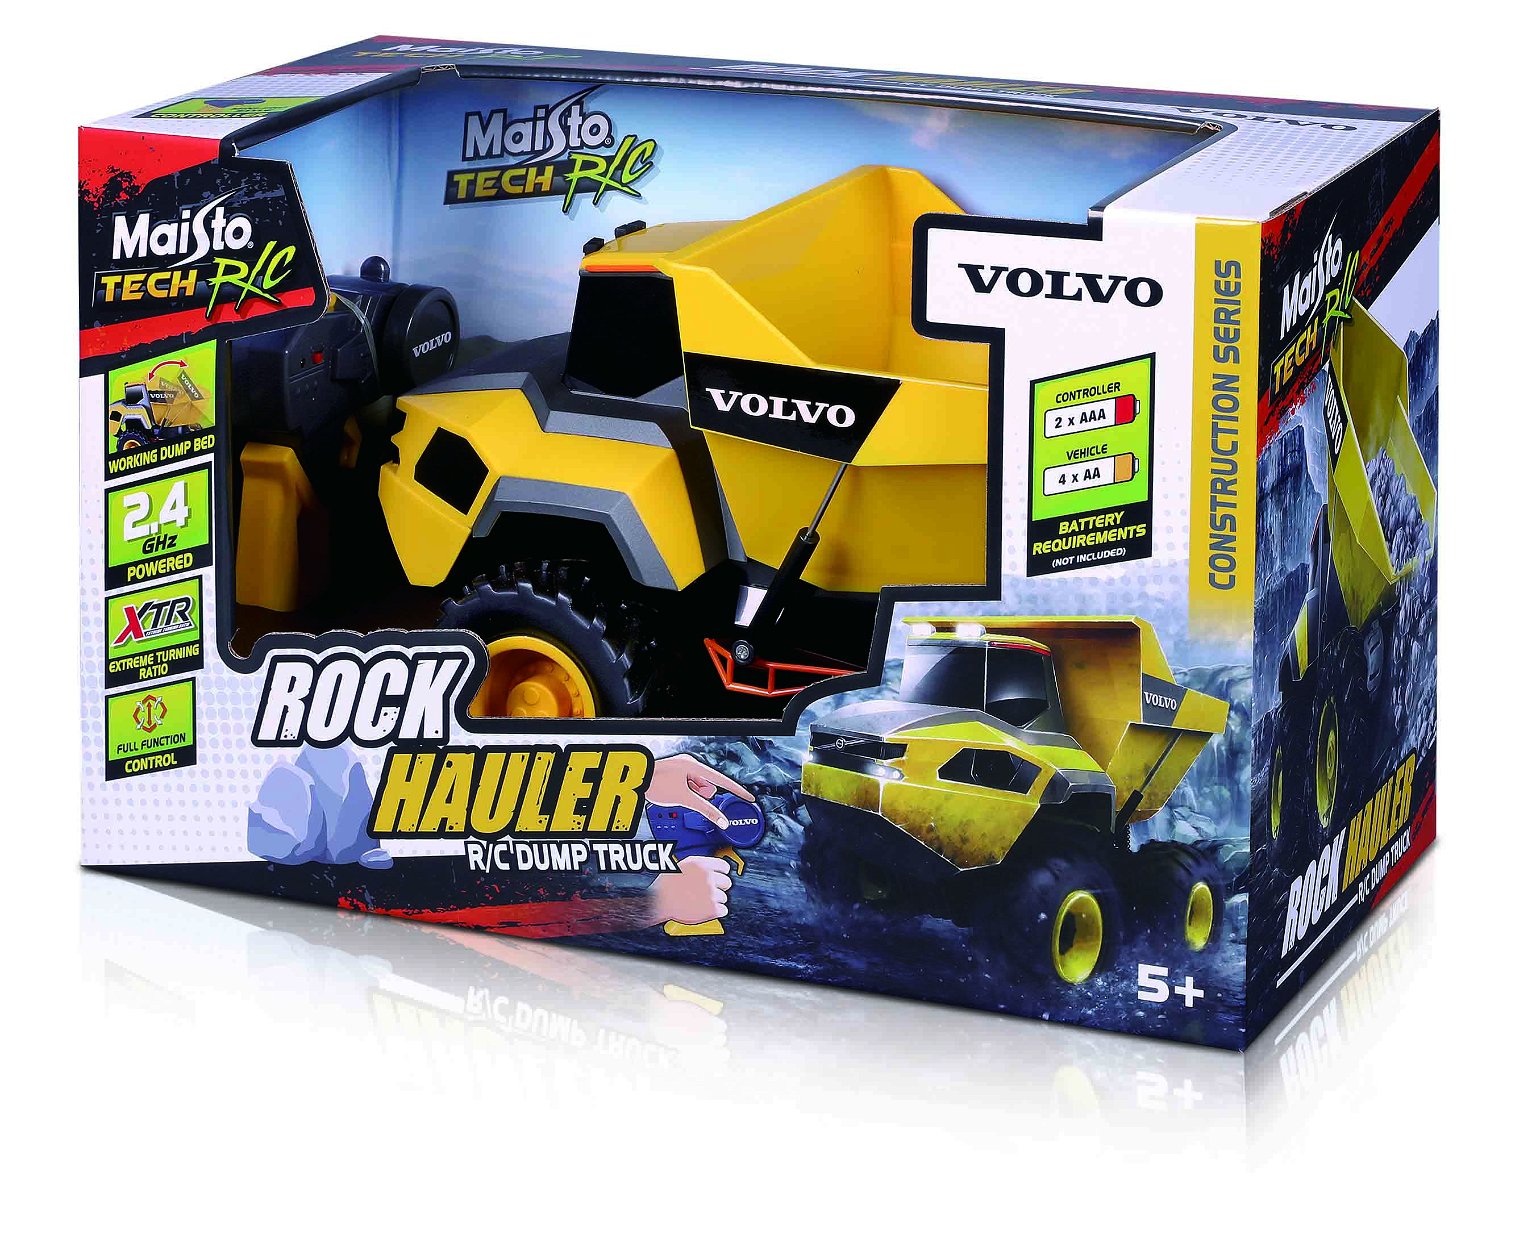 MAISTO TECH valdomas automodelis Volvo Rock Hauler Dump Truck, 82731 - 3